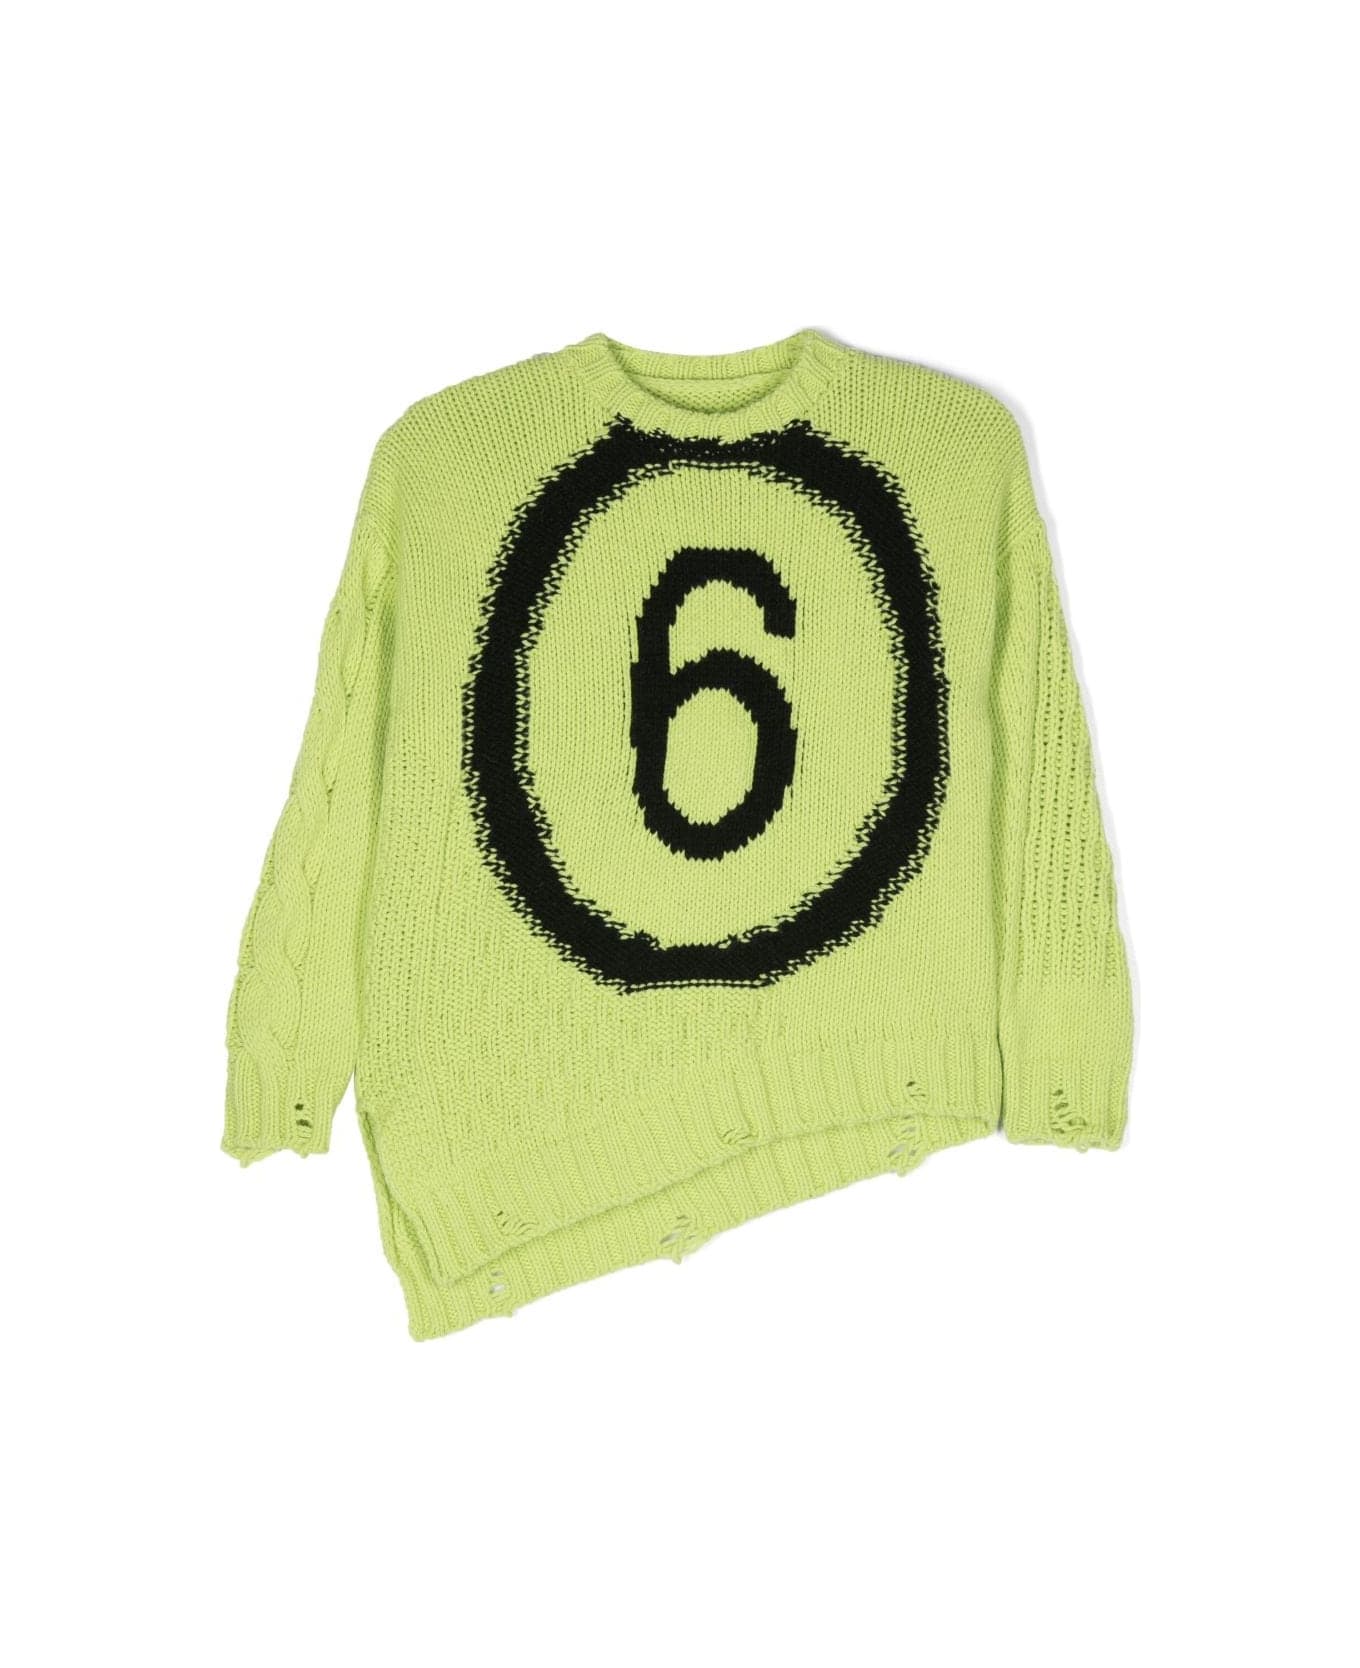 MM6 Maison Margiela M6510 Sweater - Slime Green